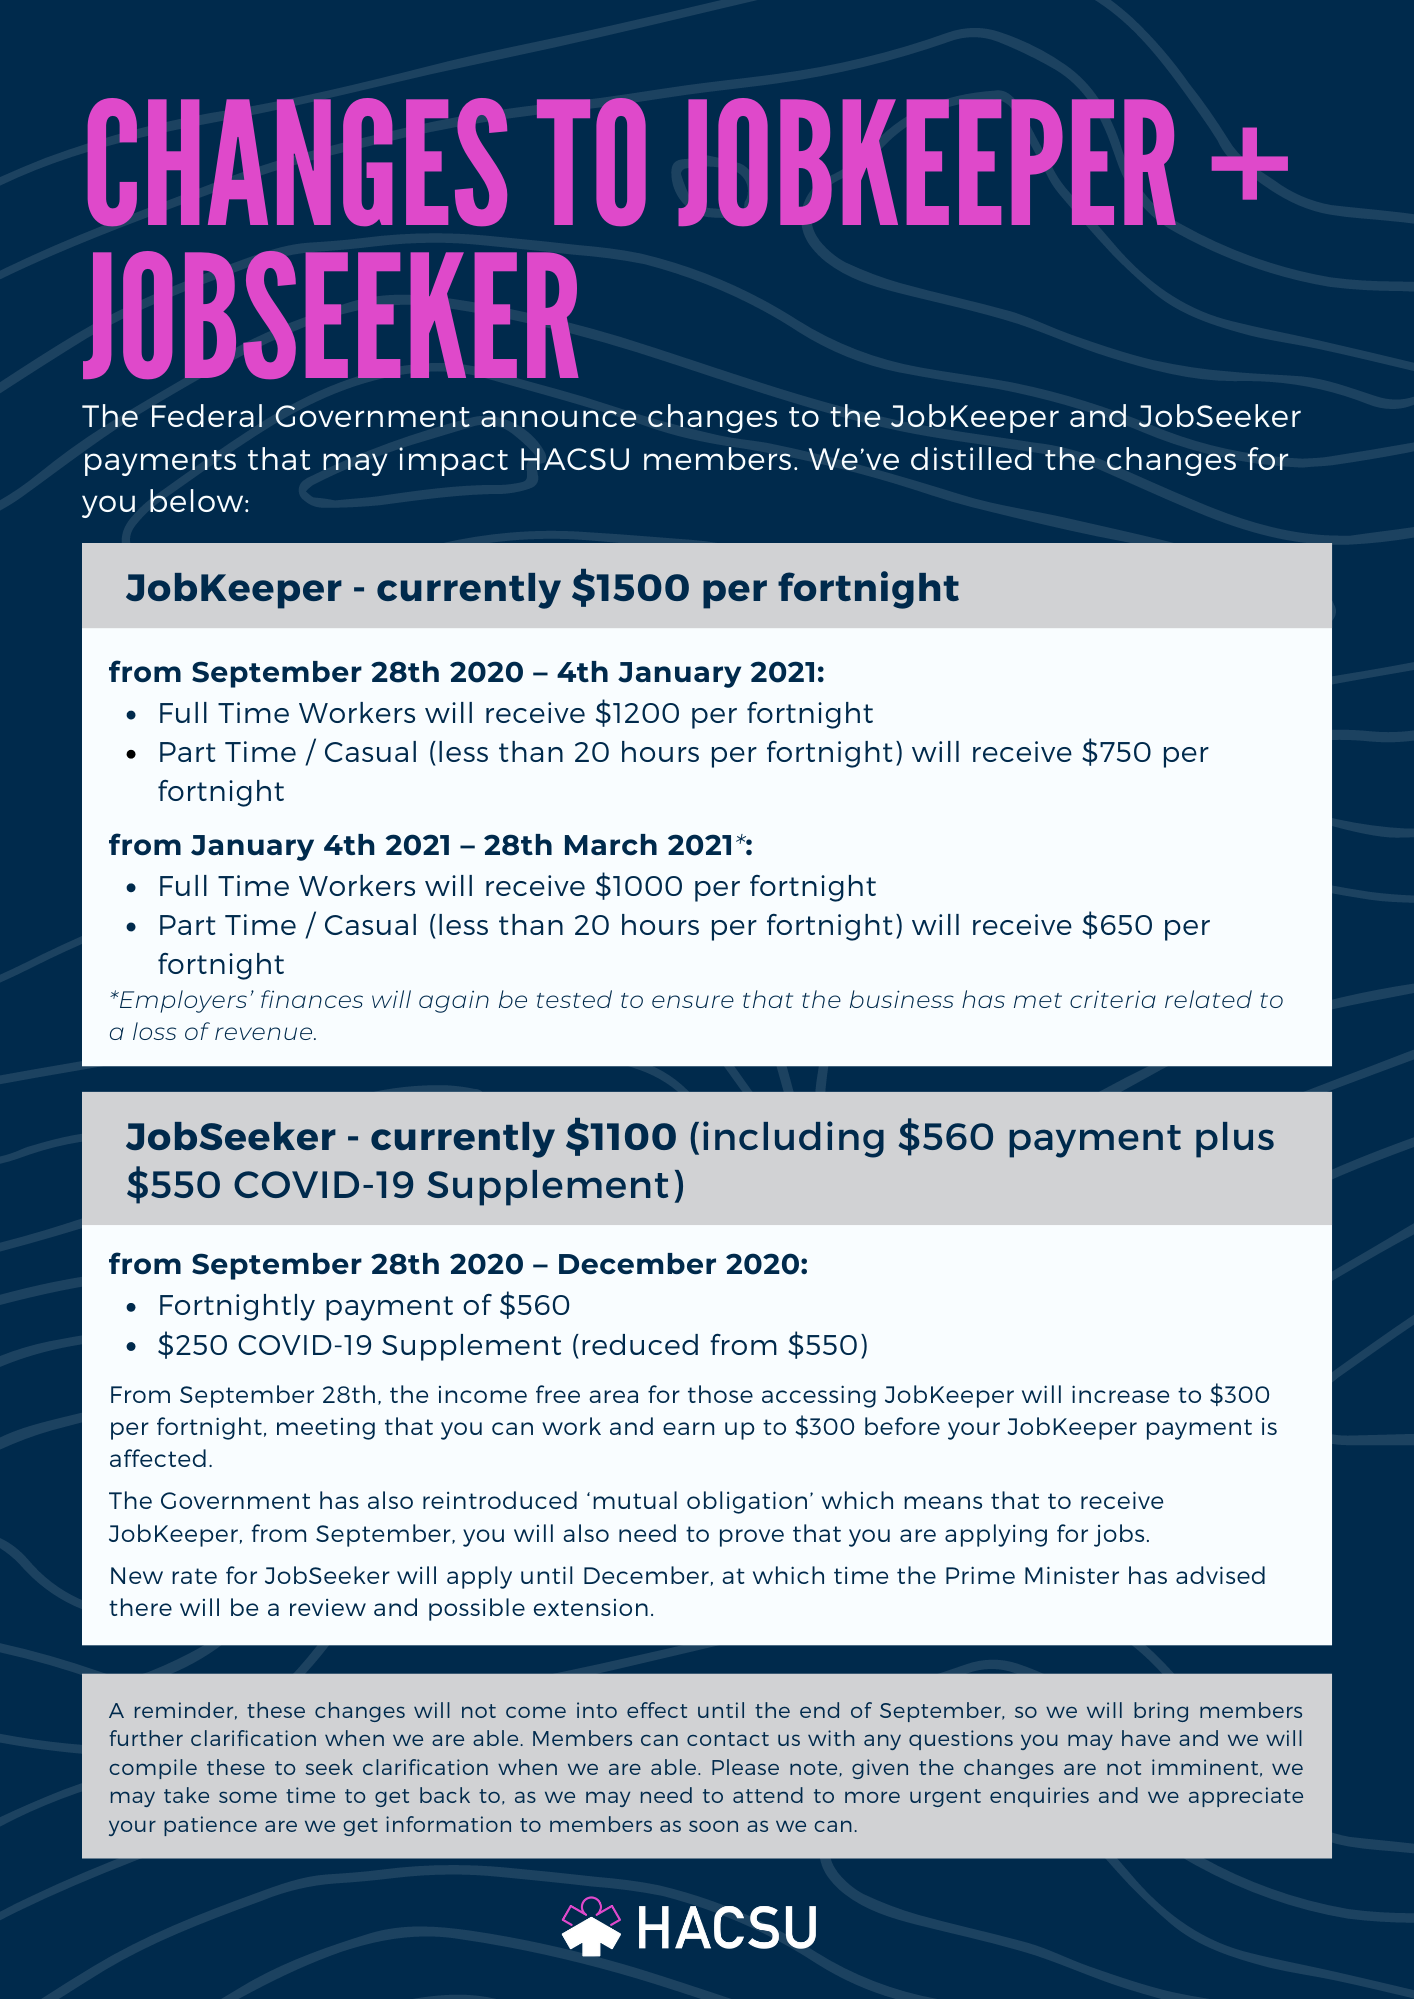 Changes to JobKeeper + JobSeeker Payments